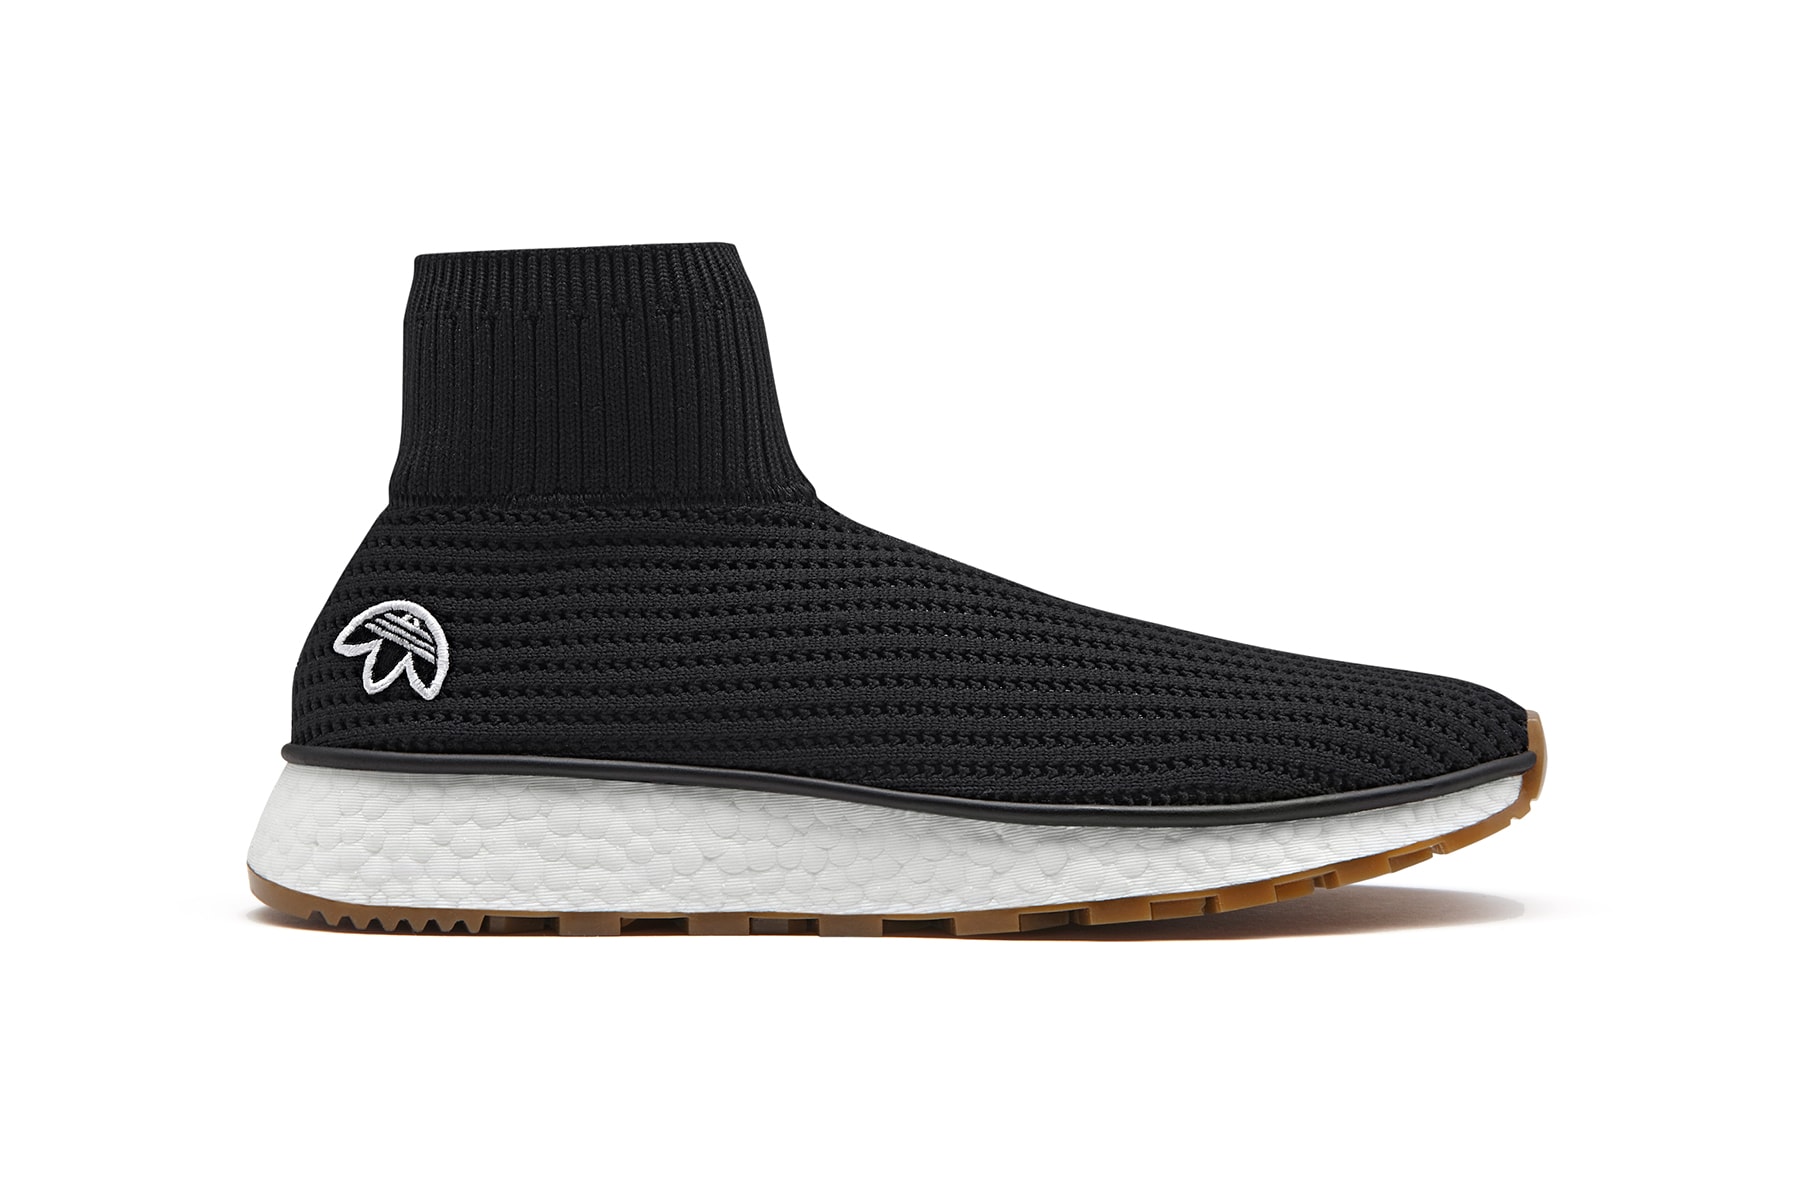 adidas originals alexander wang season 3 drop 2 collection collaboration clothing footwear sneaker release date info drop may 19 2018 spring summer trefoil